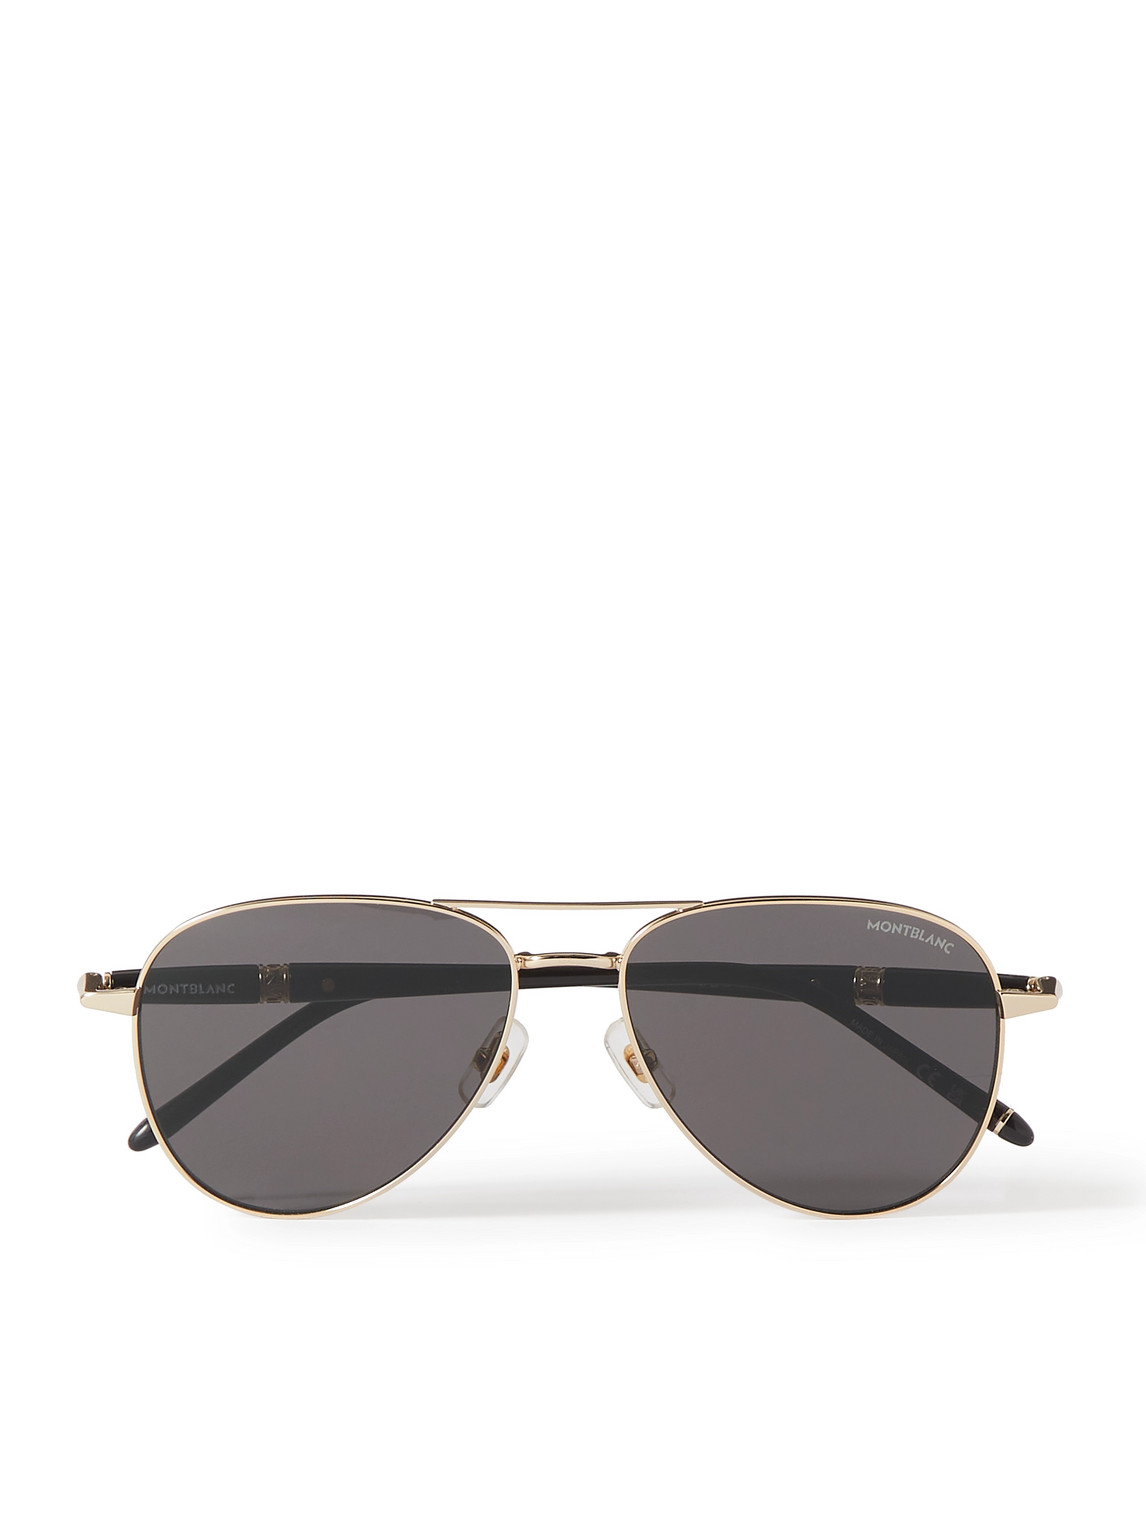 Montblanc Meisterstück Aviator-style Gold-tone Acetate Sunglasses